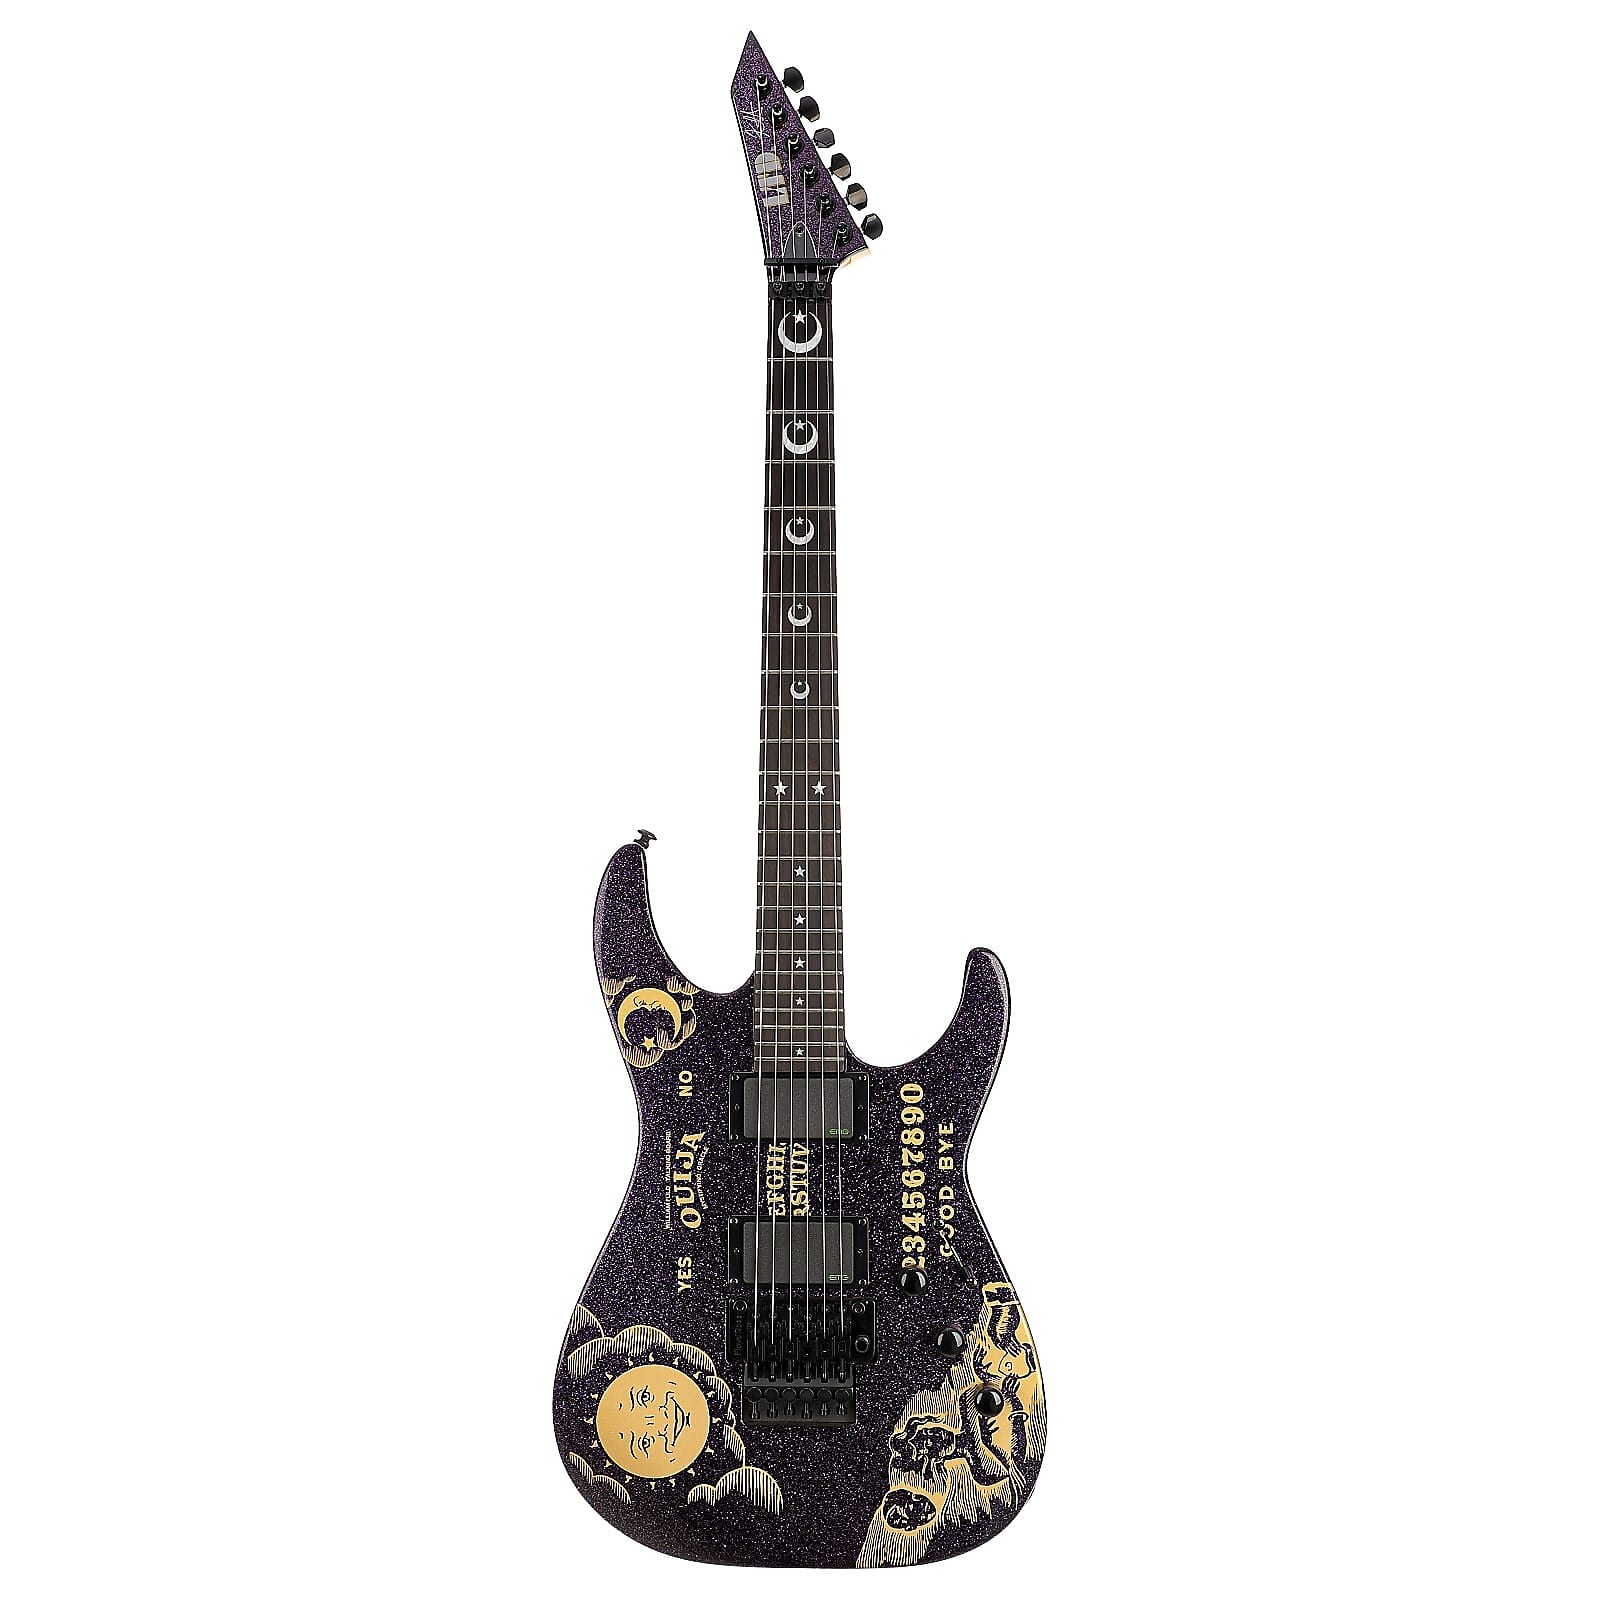 Ltd limited. ESP гитара Kirk Hammett. Гитара Ltd ESP Kirk Hammet. Гитара ESP Ouija Kirk Hammett Metallica. ESP Ltd Kirk Hammett.